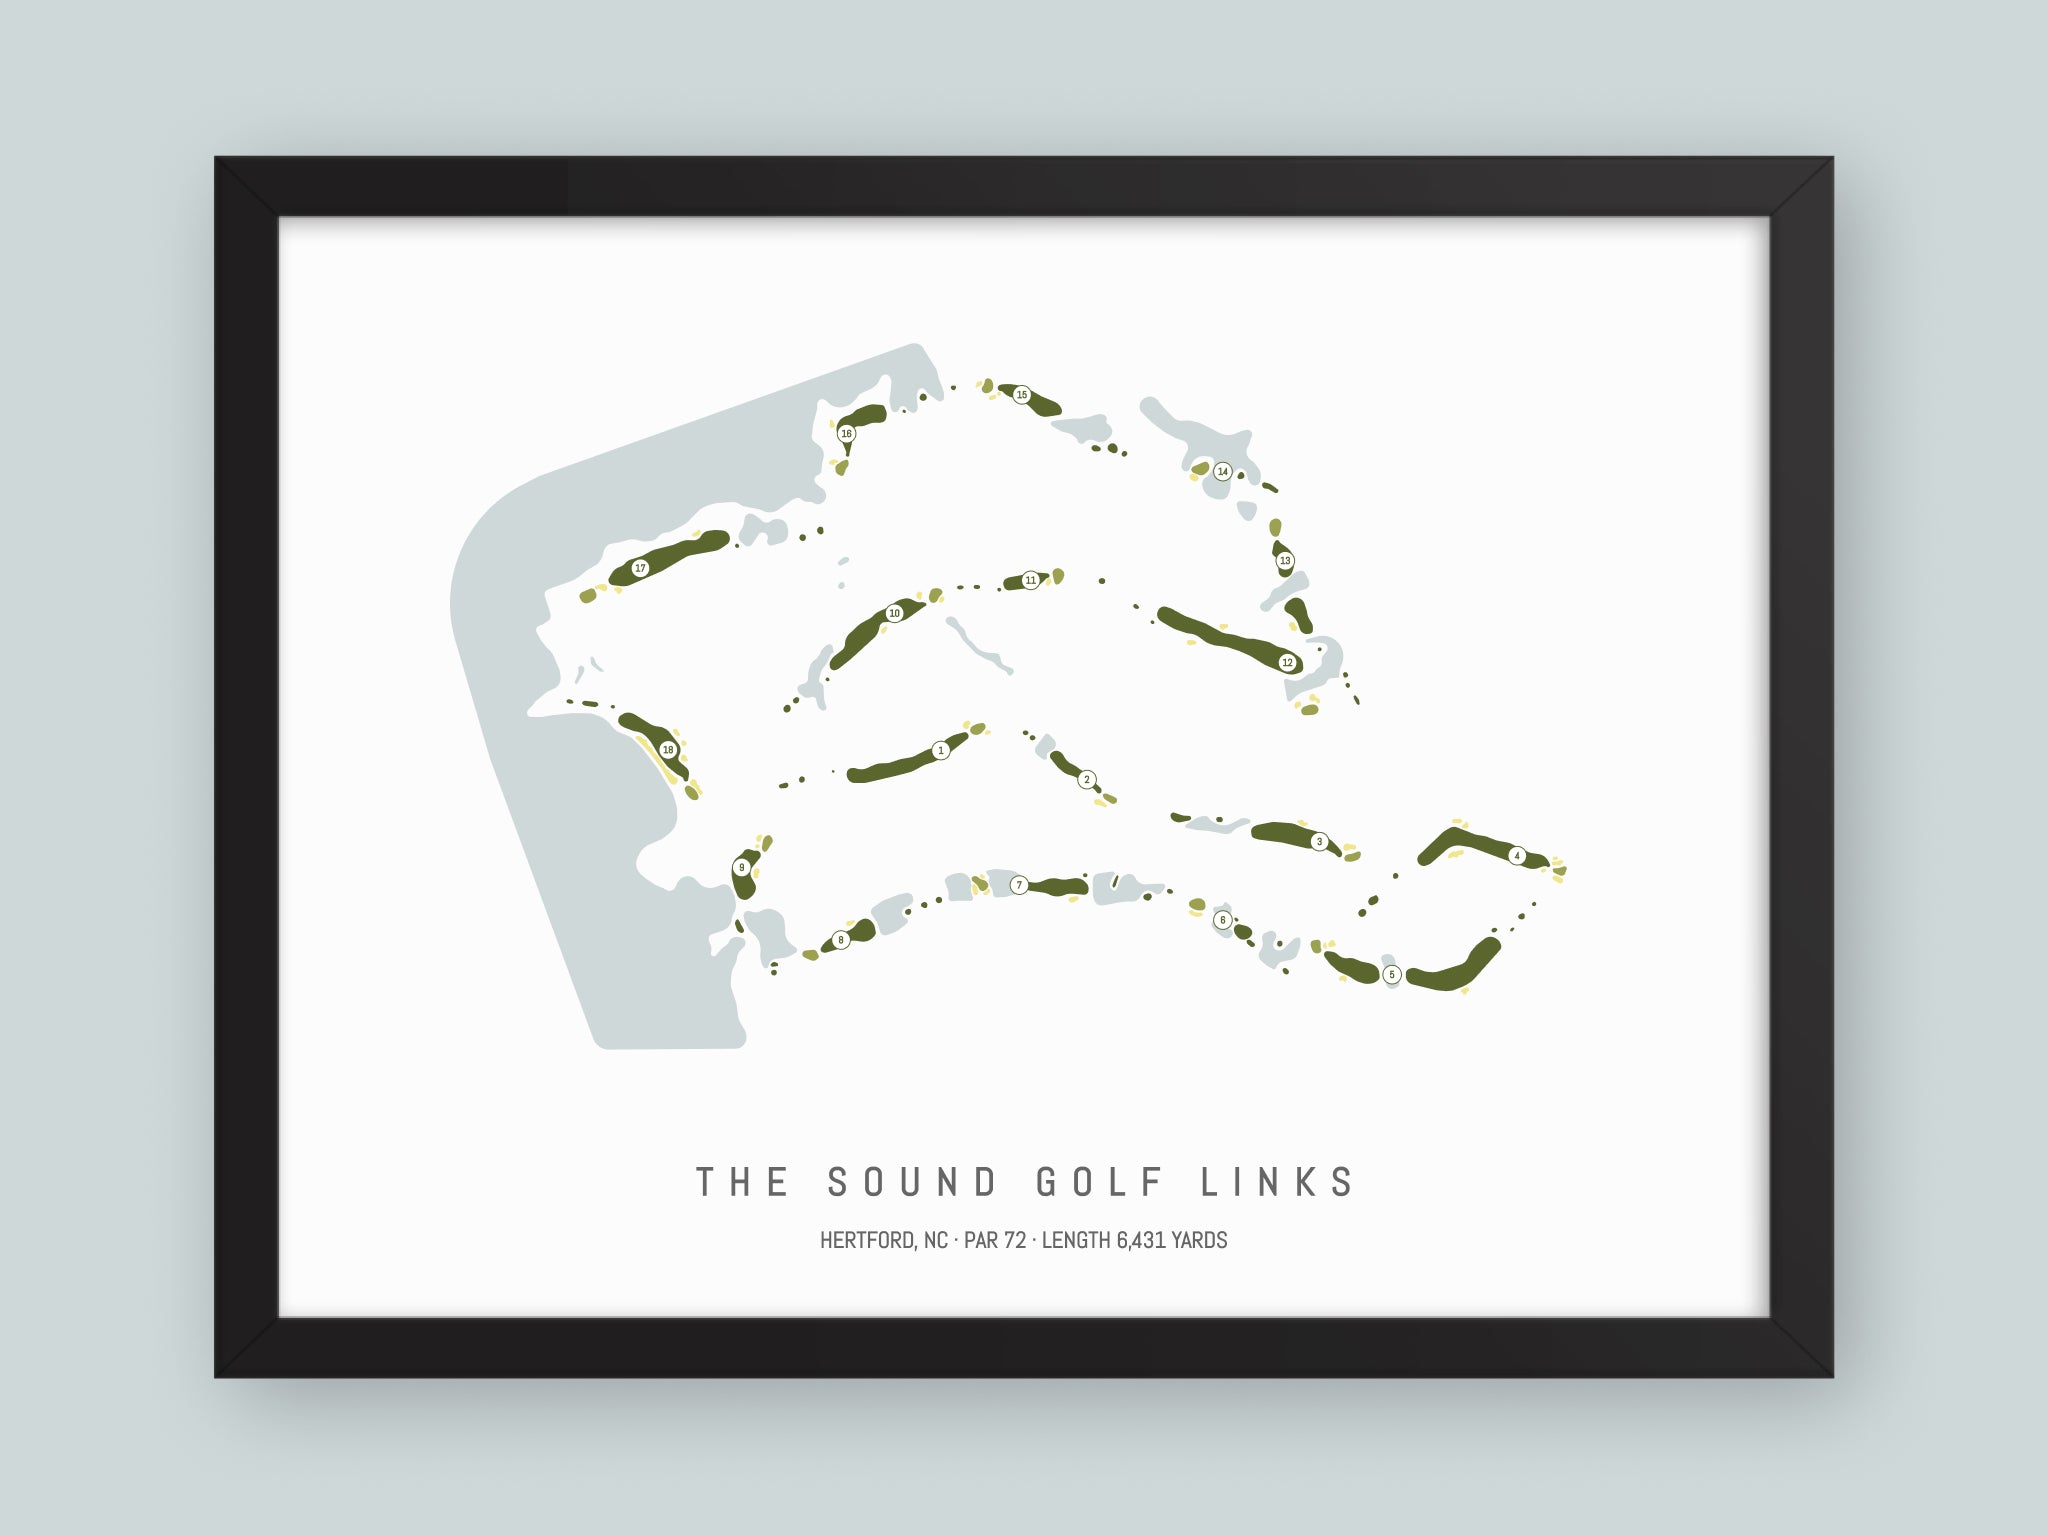 The Sound Golf Links